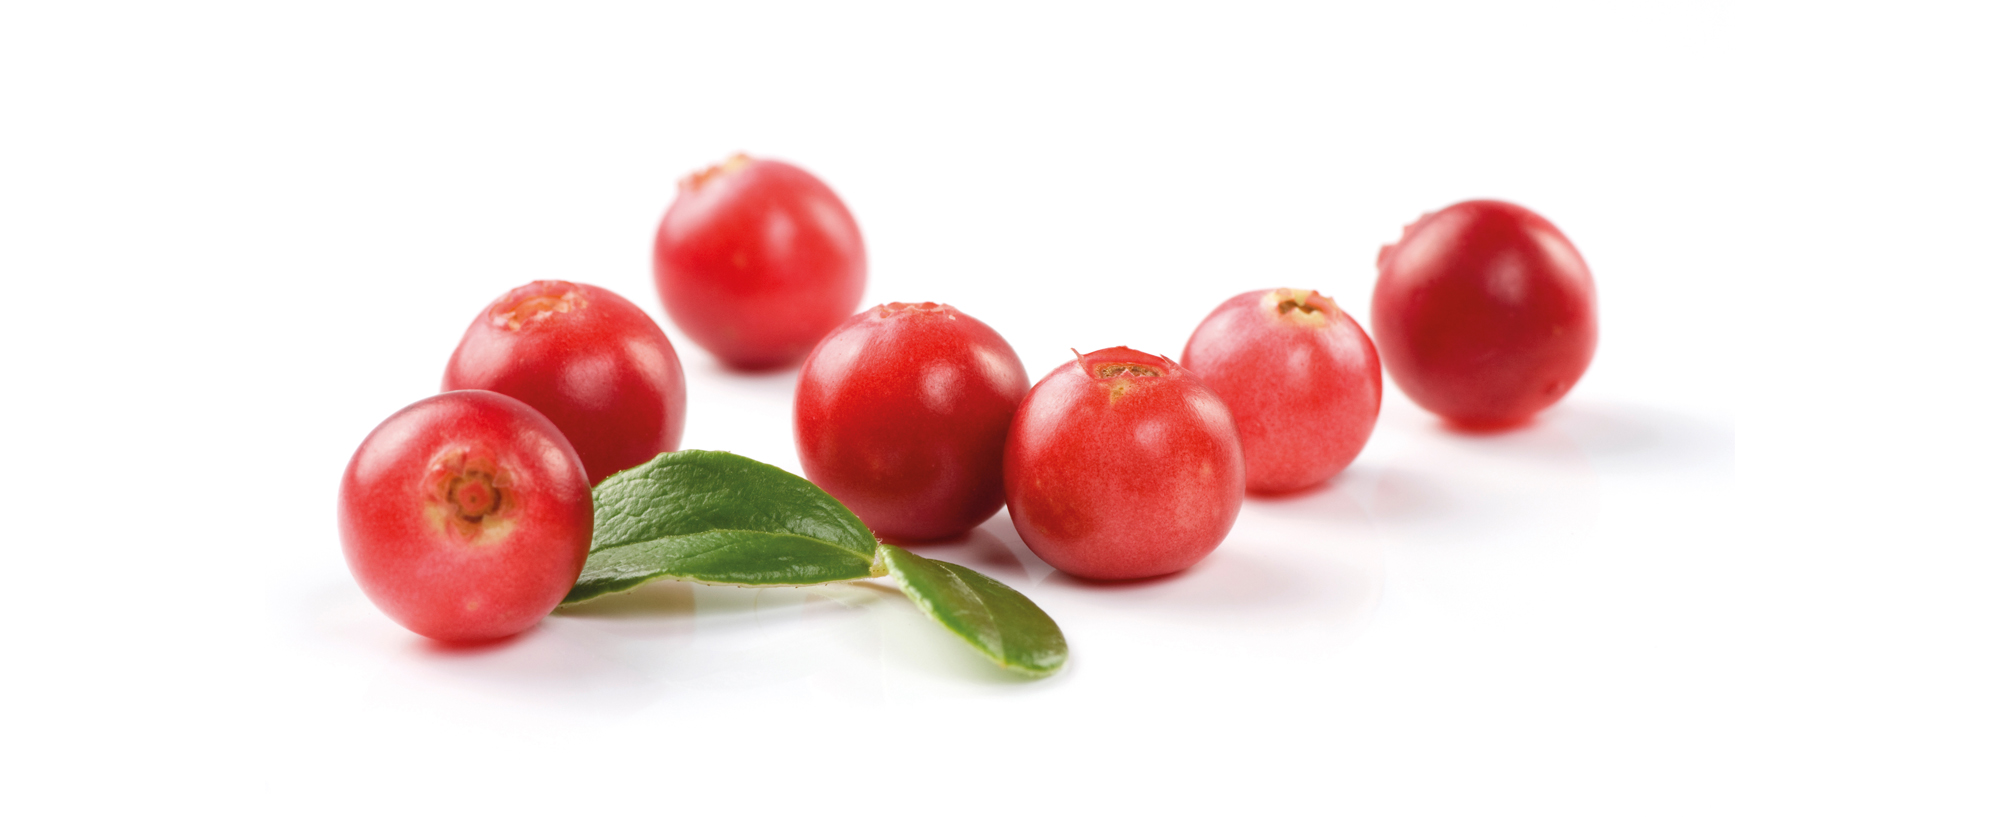 Cranberry wirkt antibakteriell